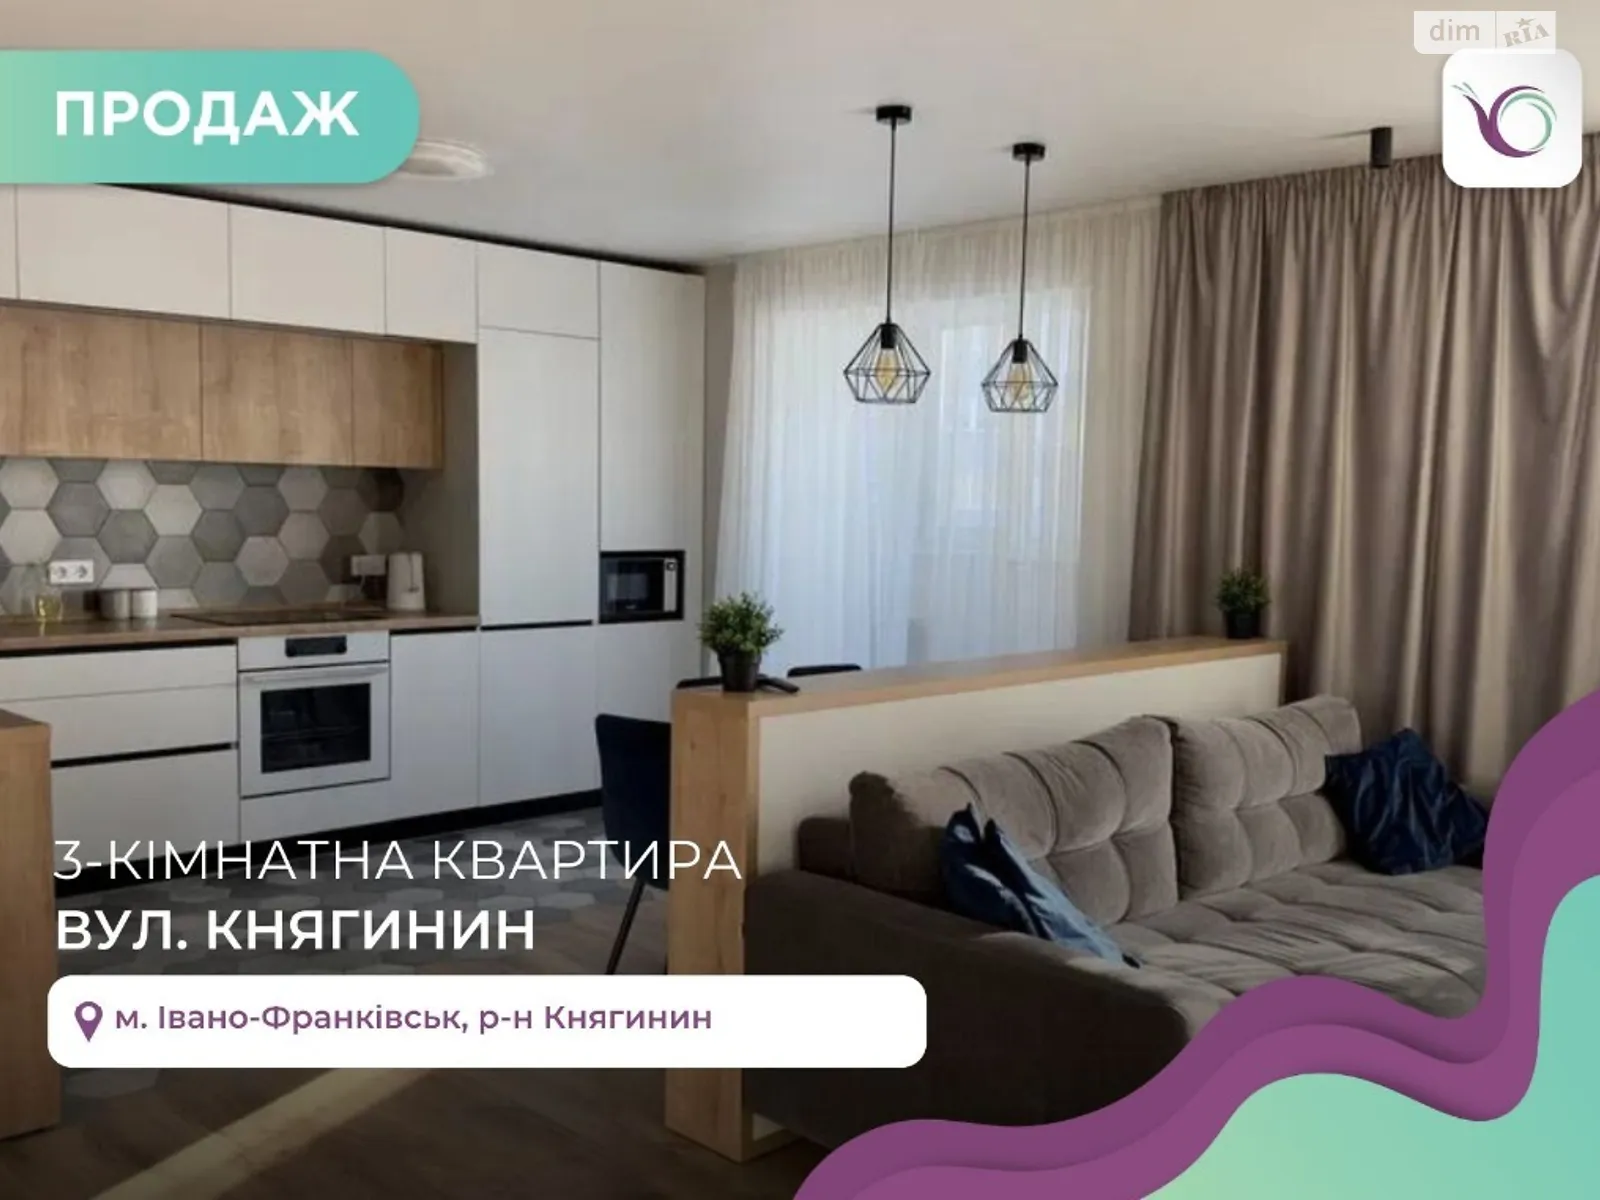 Продается 3-комнатная квартира 87 кв. м в Ивано-Франковске, ул. Княгинин - фото 1